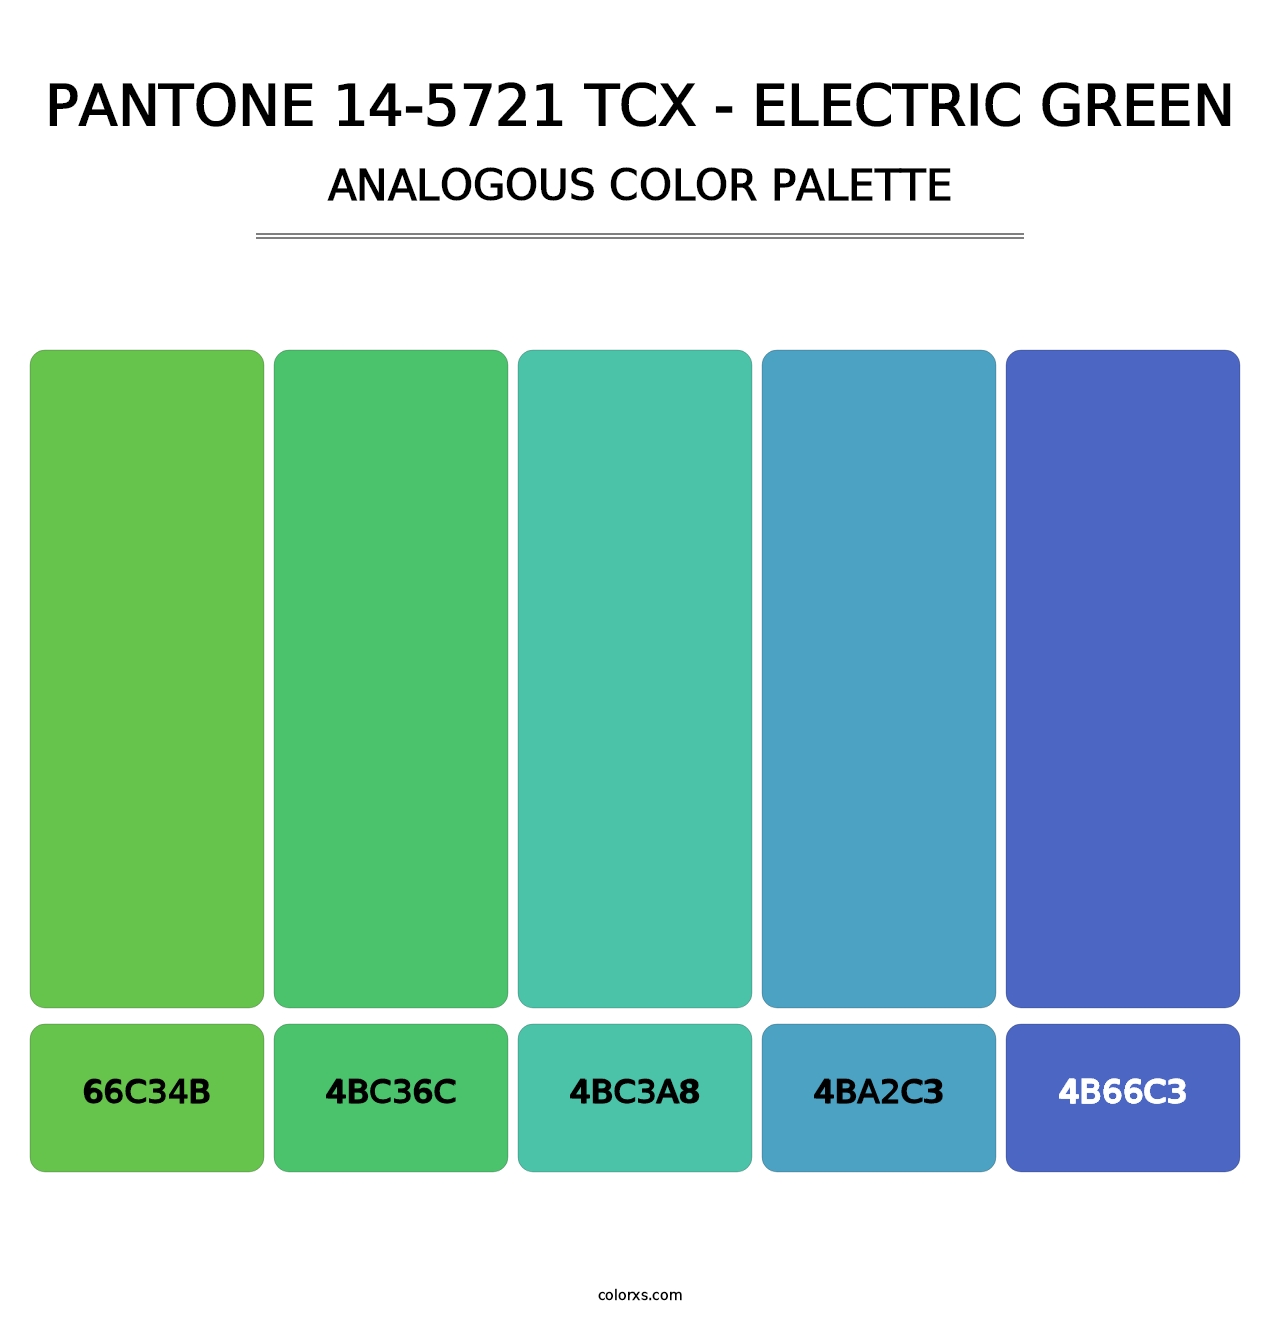 PANTONE 14-5721 TCX - Electric Green - Analogous Color Palette